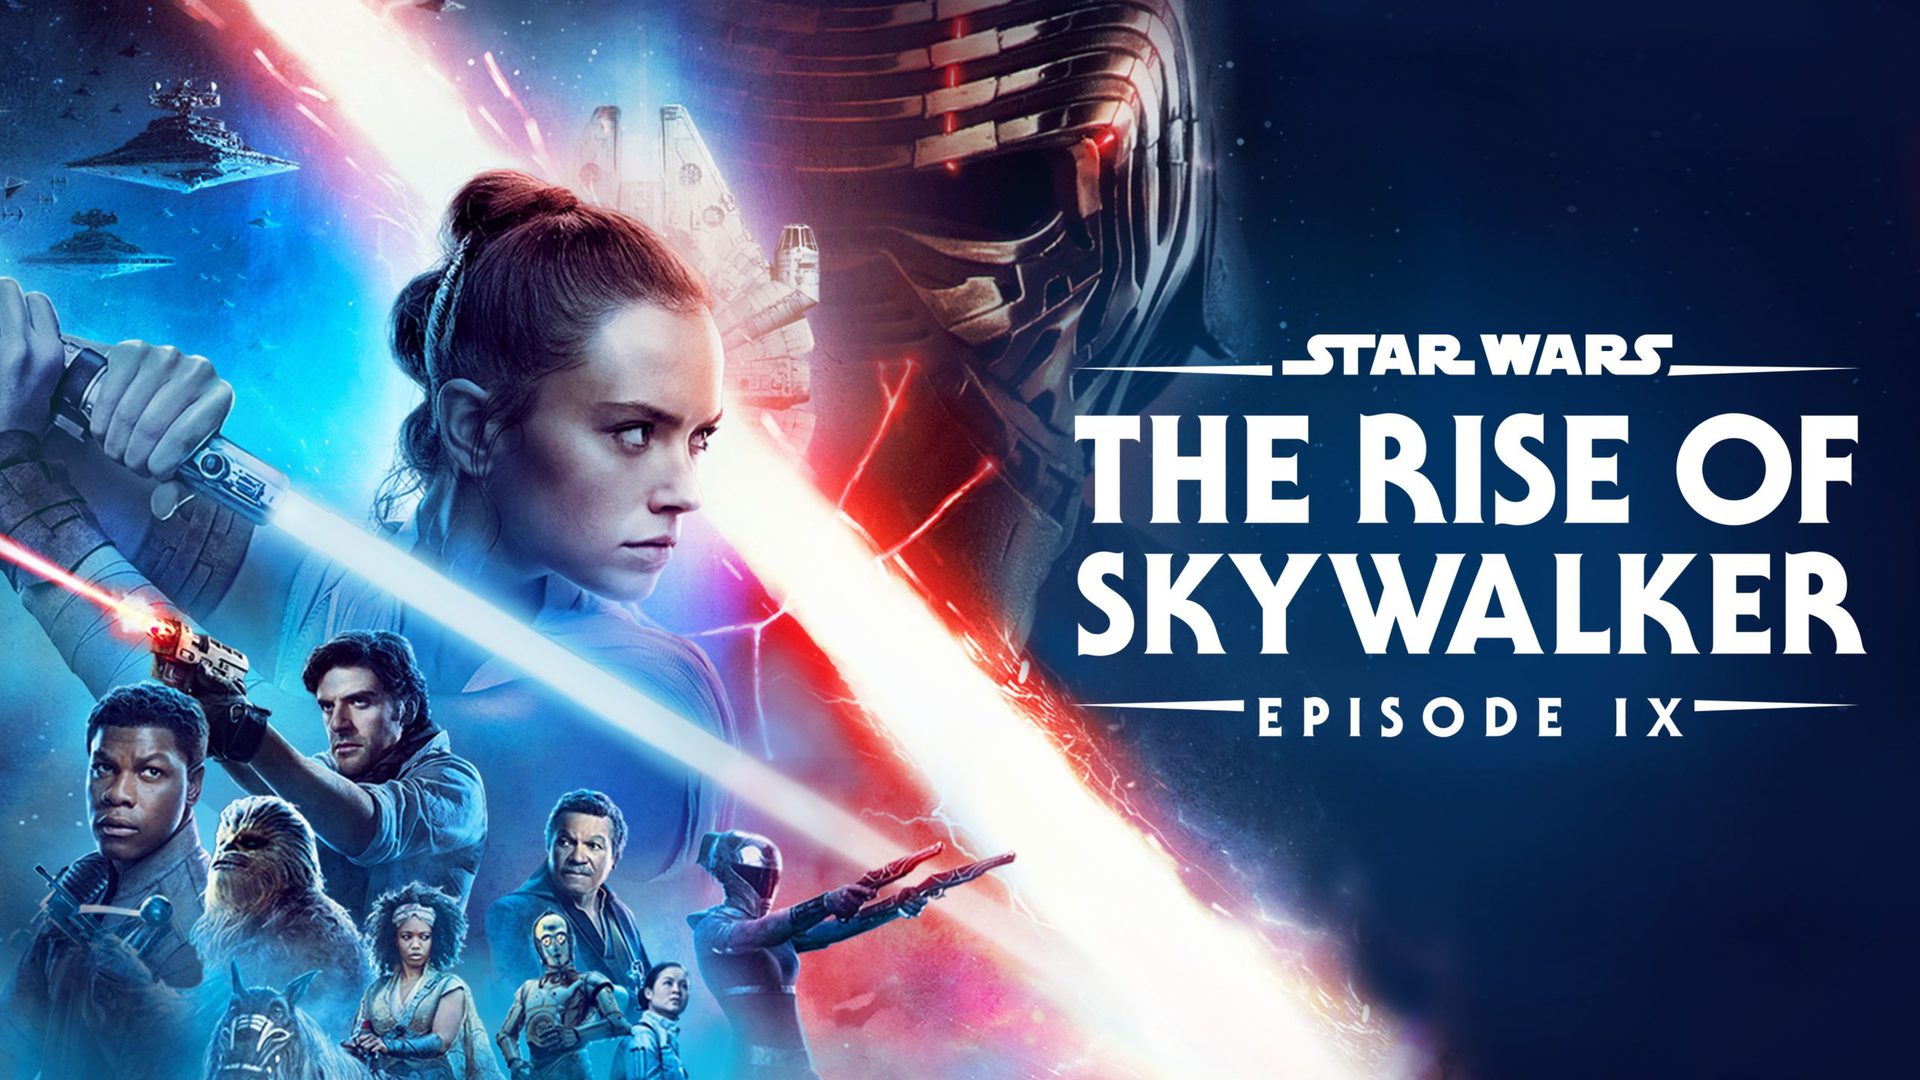 star wars episode ix the rise of skywalker poster